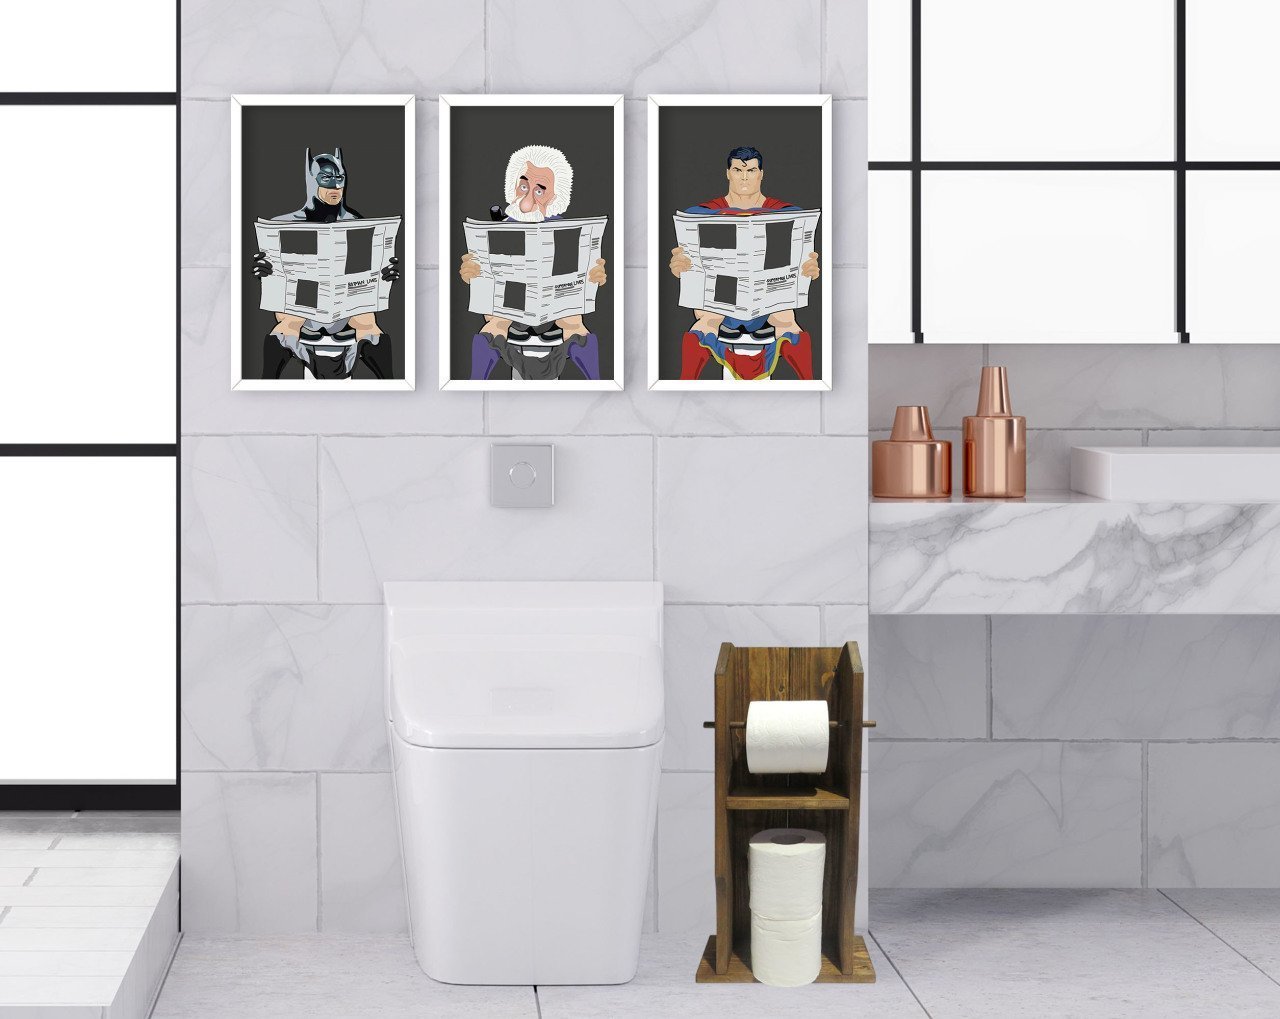 BK Home Doğal Masif Ahşap Tuvalet Kağıtlığı ve Dekoratif 3’lü Ahşap Beyaz Çerçeveli Tablo-7